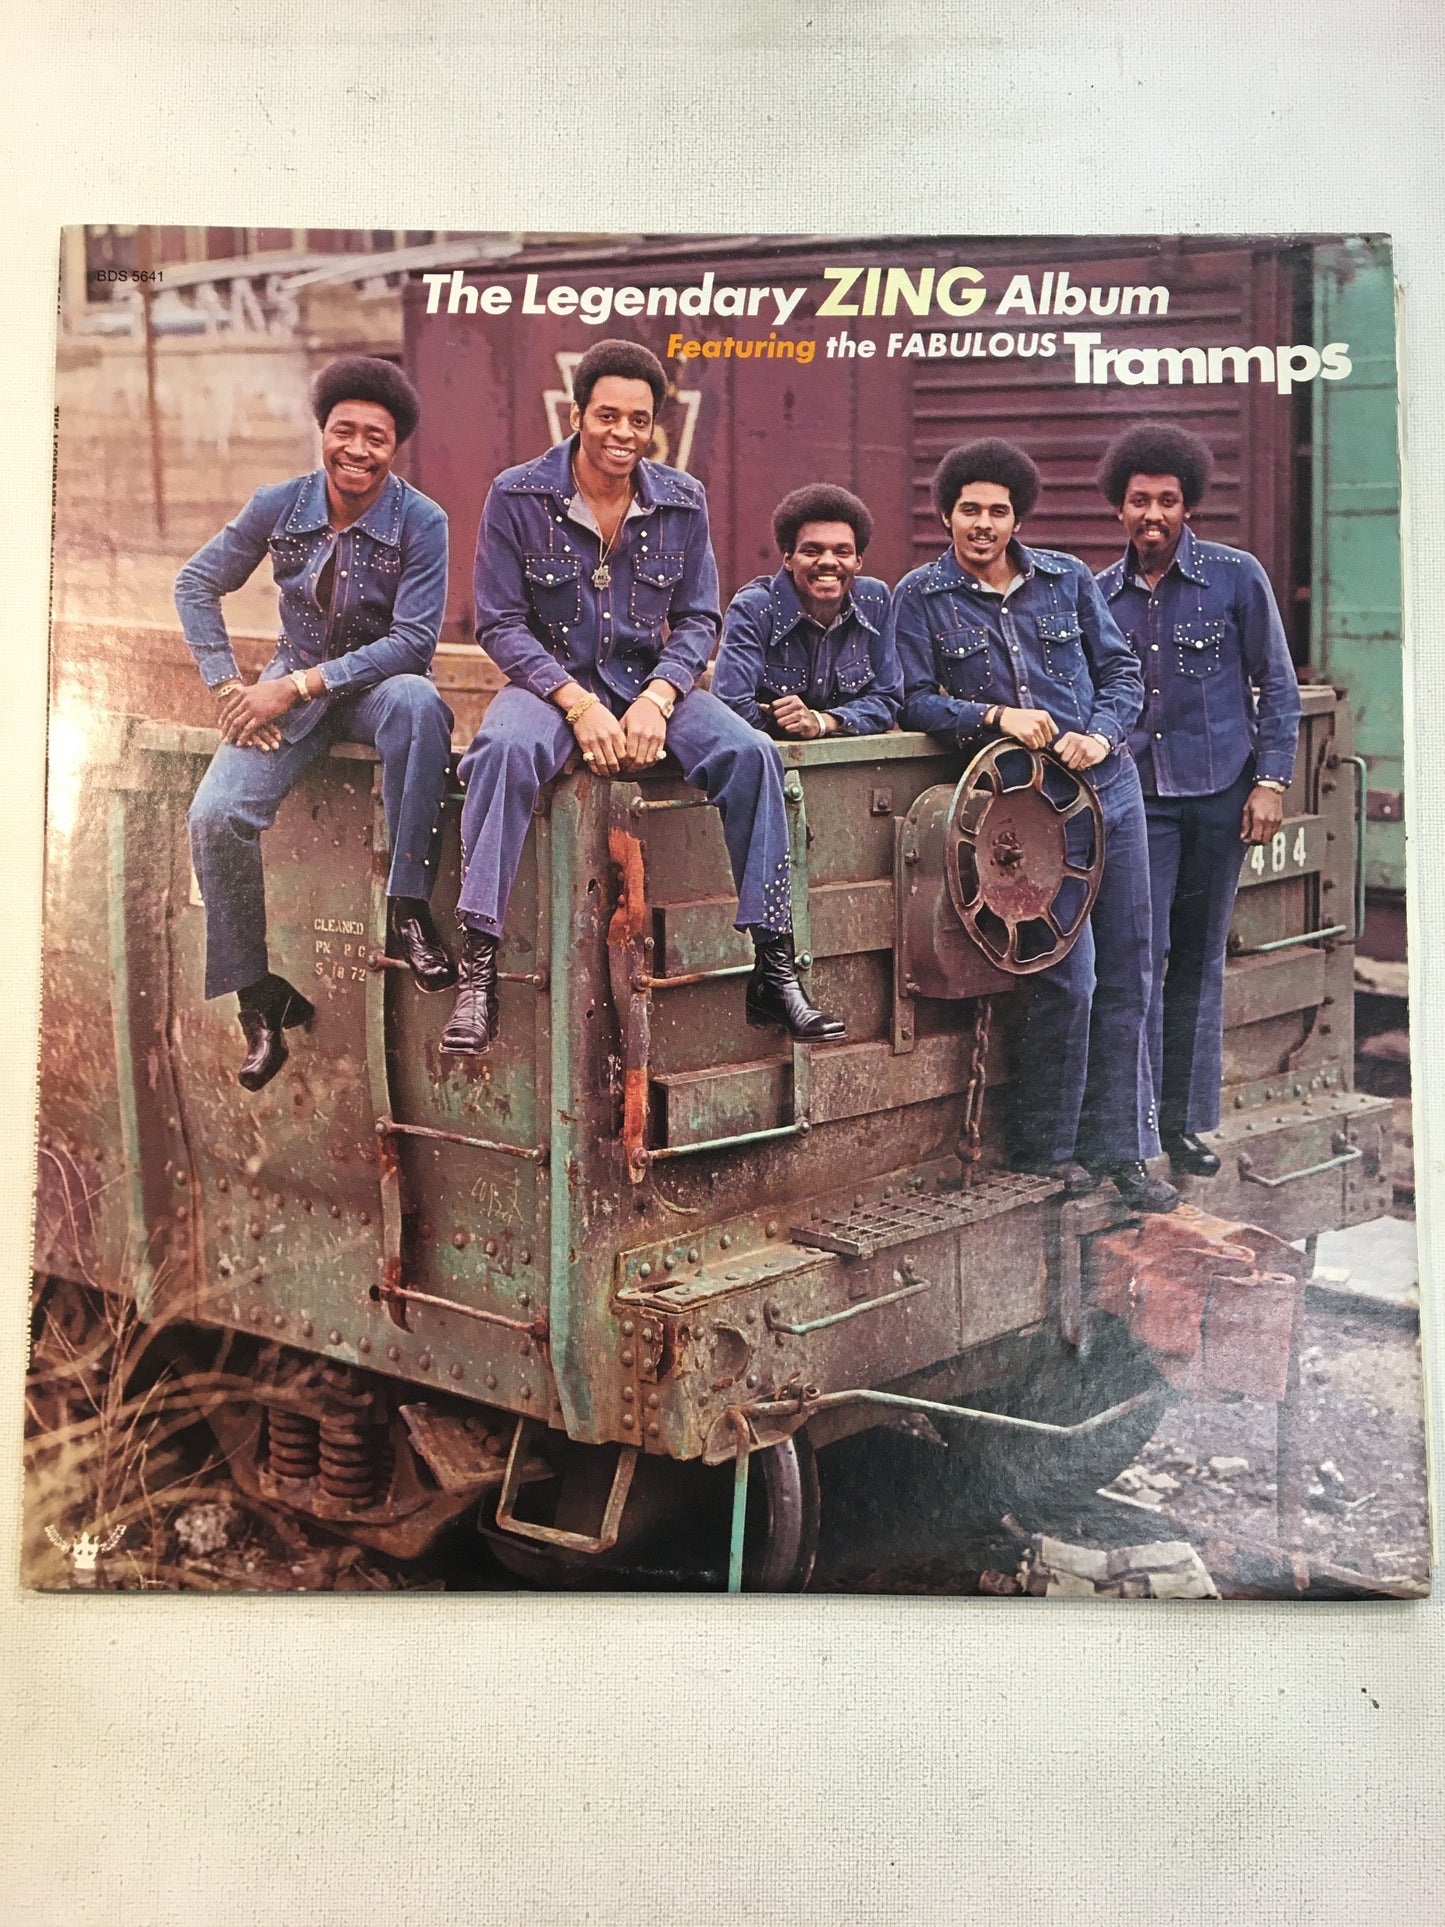 The TRAMMPS LP THE LEGENDARY “ZING” ALBUM